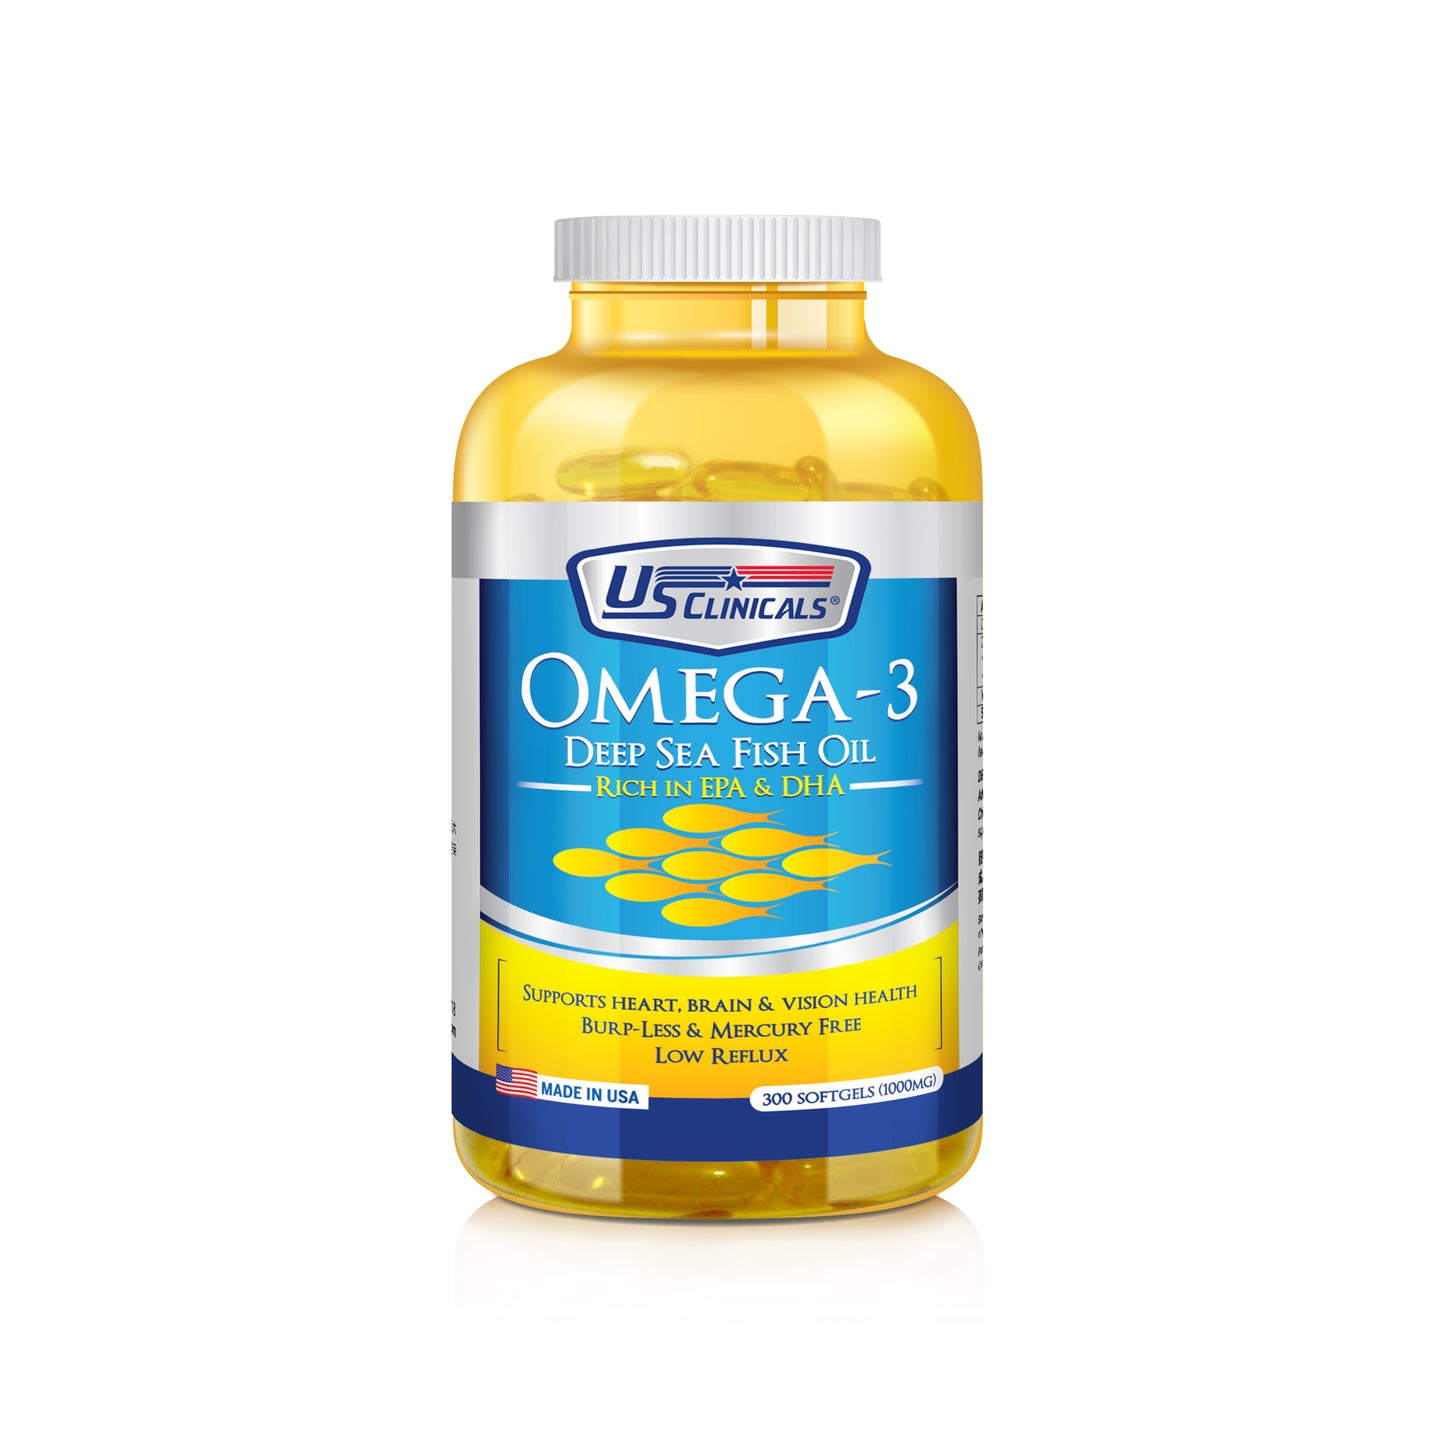 US Clinicals® Omega-3 Deep Sea Fish Oil